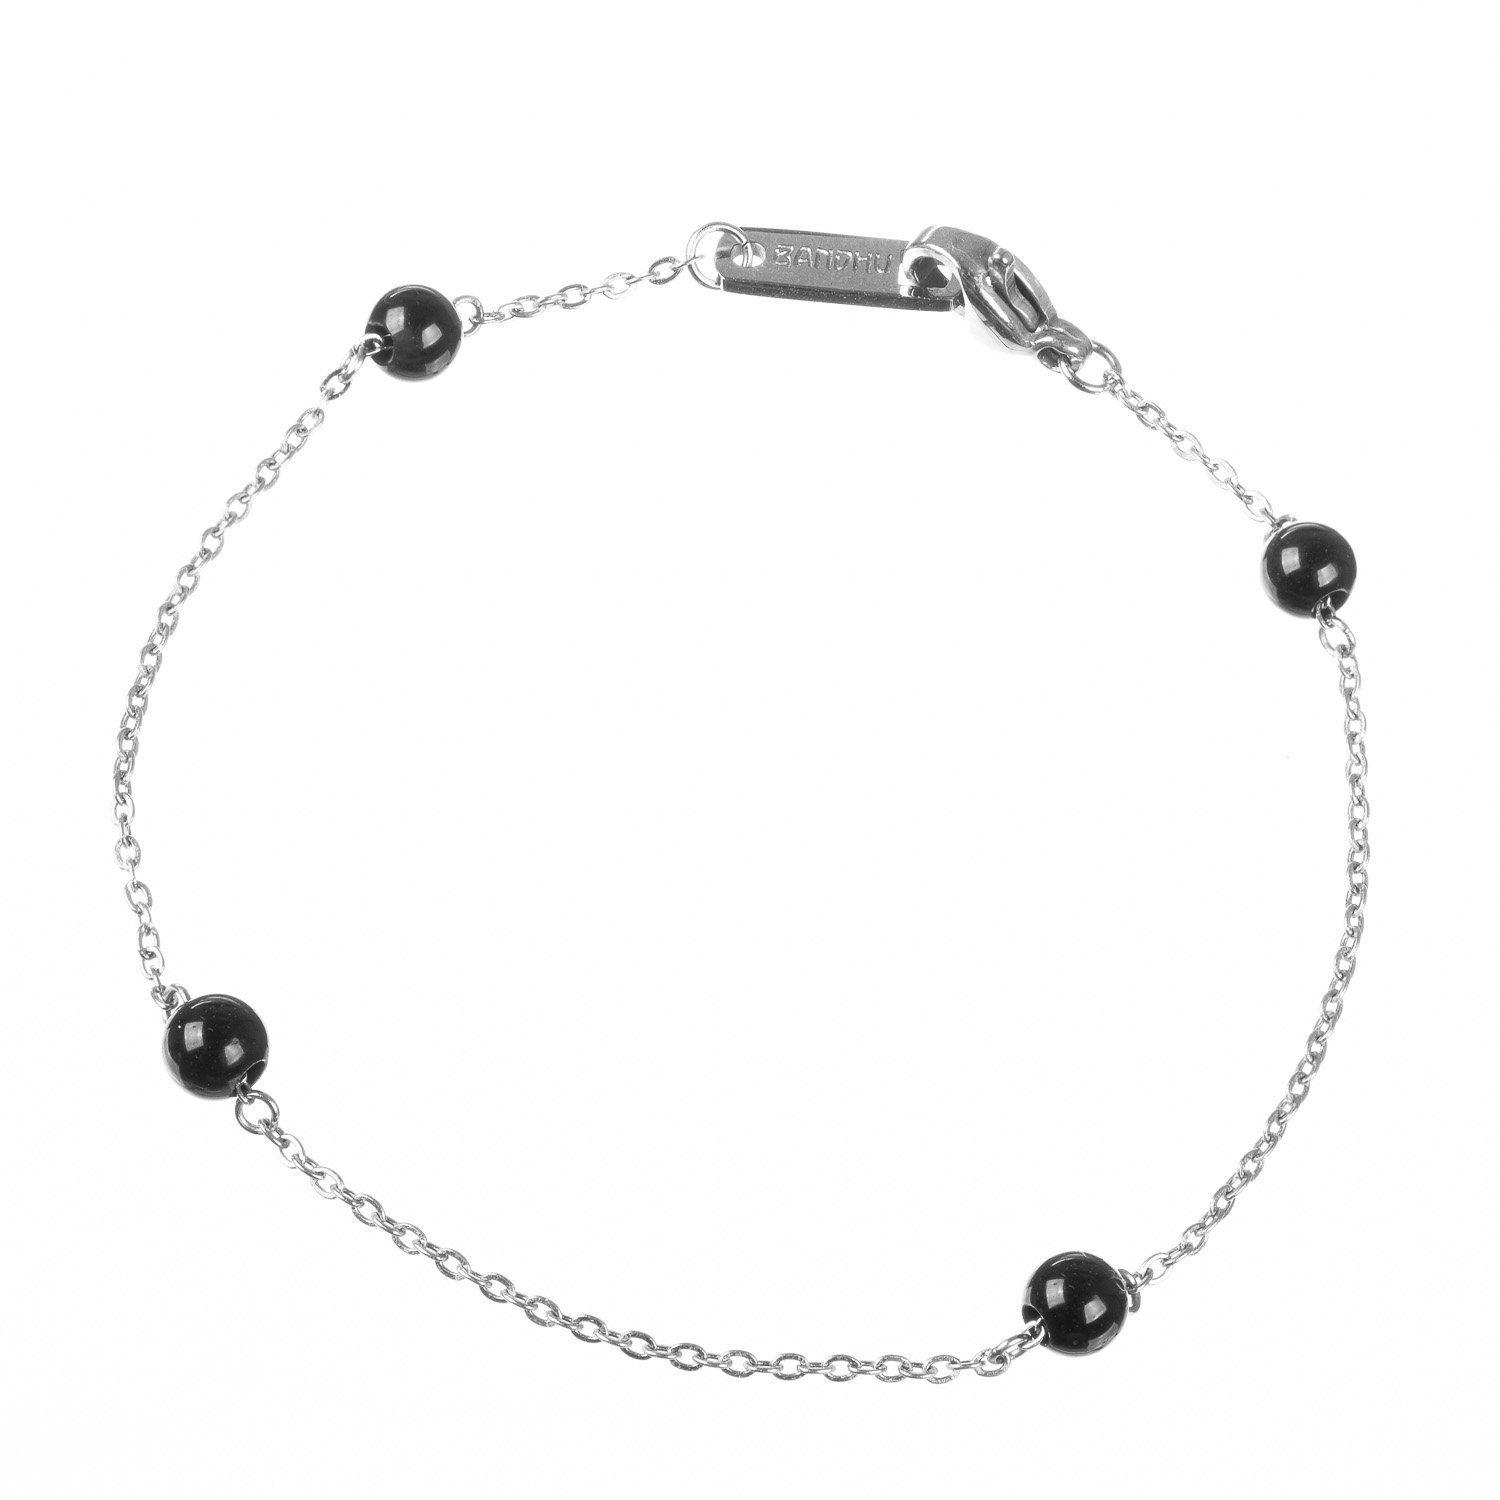 Share more than 59 energy muse bracelets latest - ceg.edu.vn